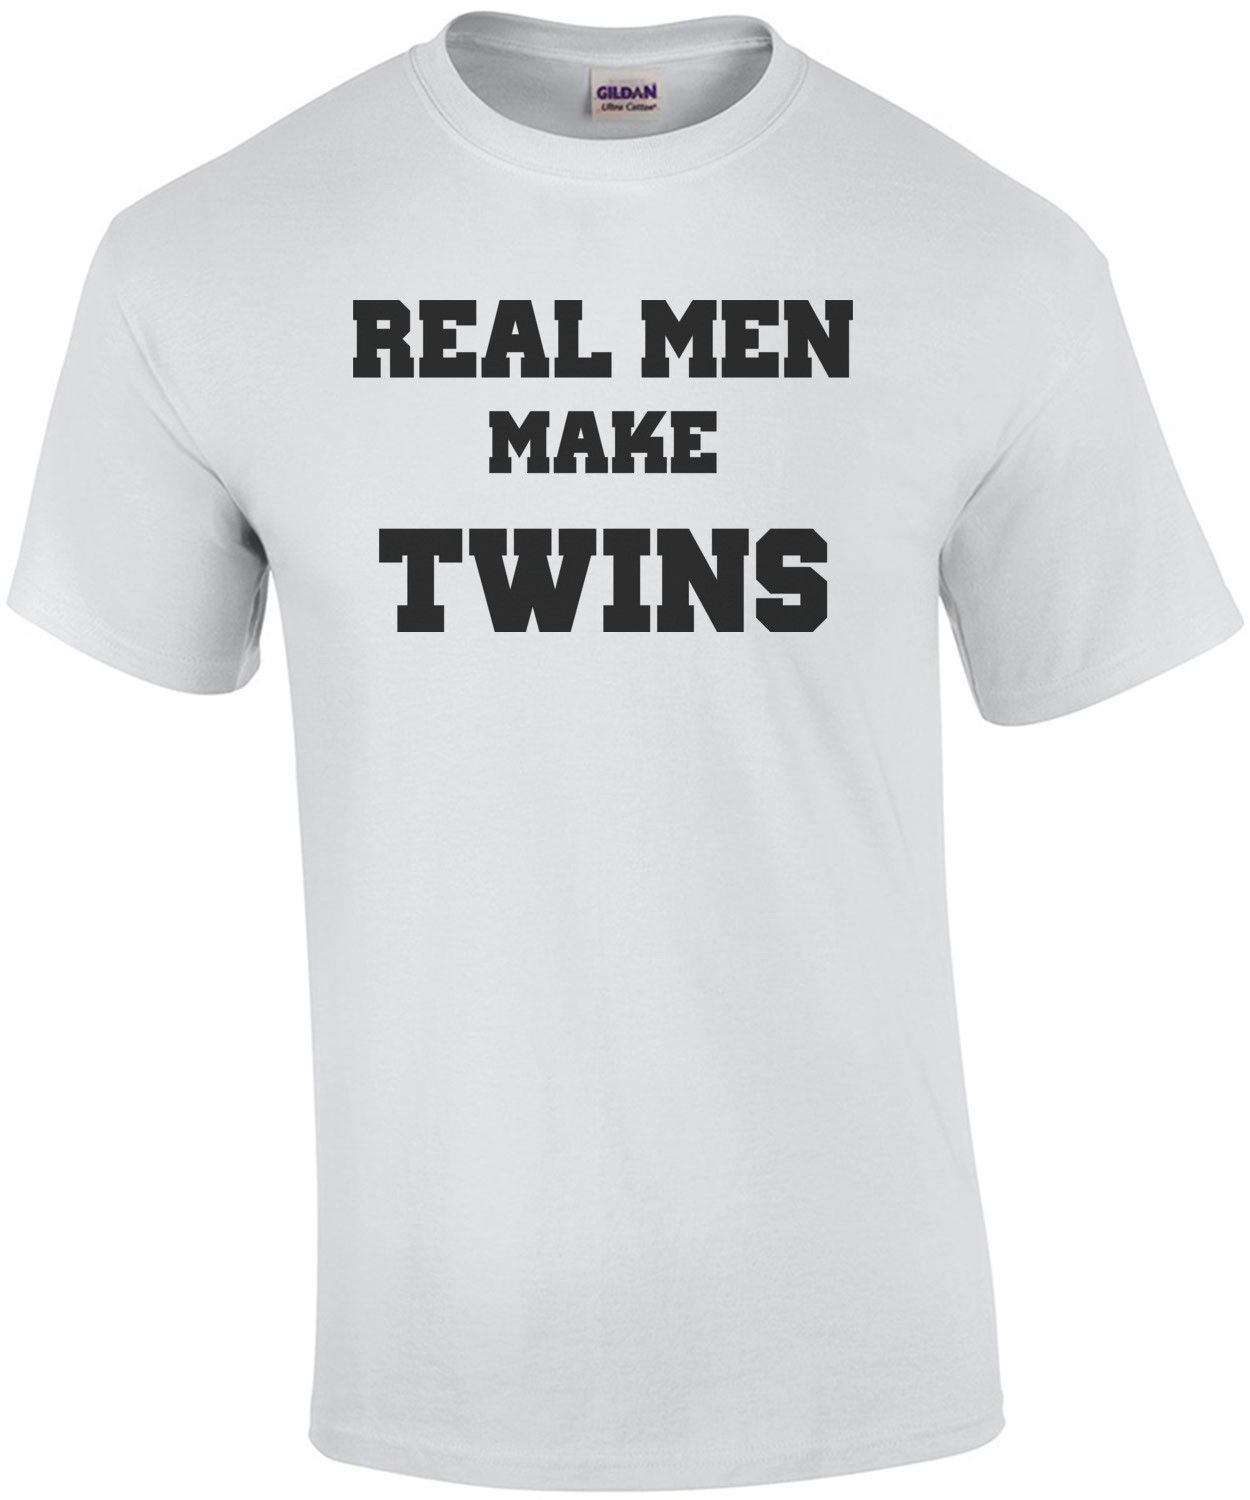 Real Men Make Twins Shirt